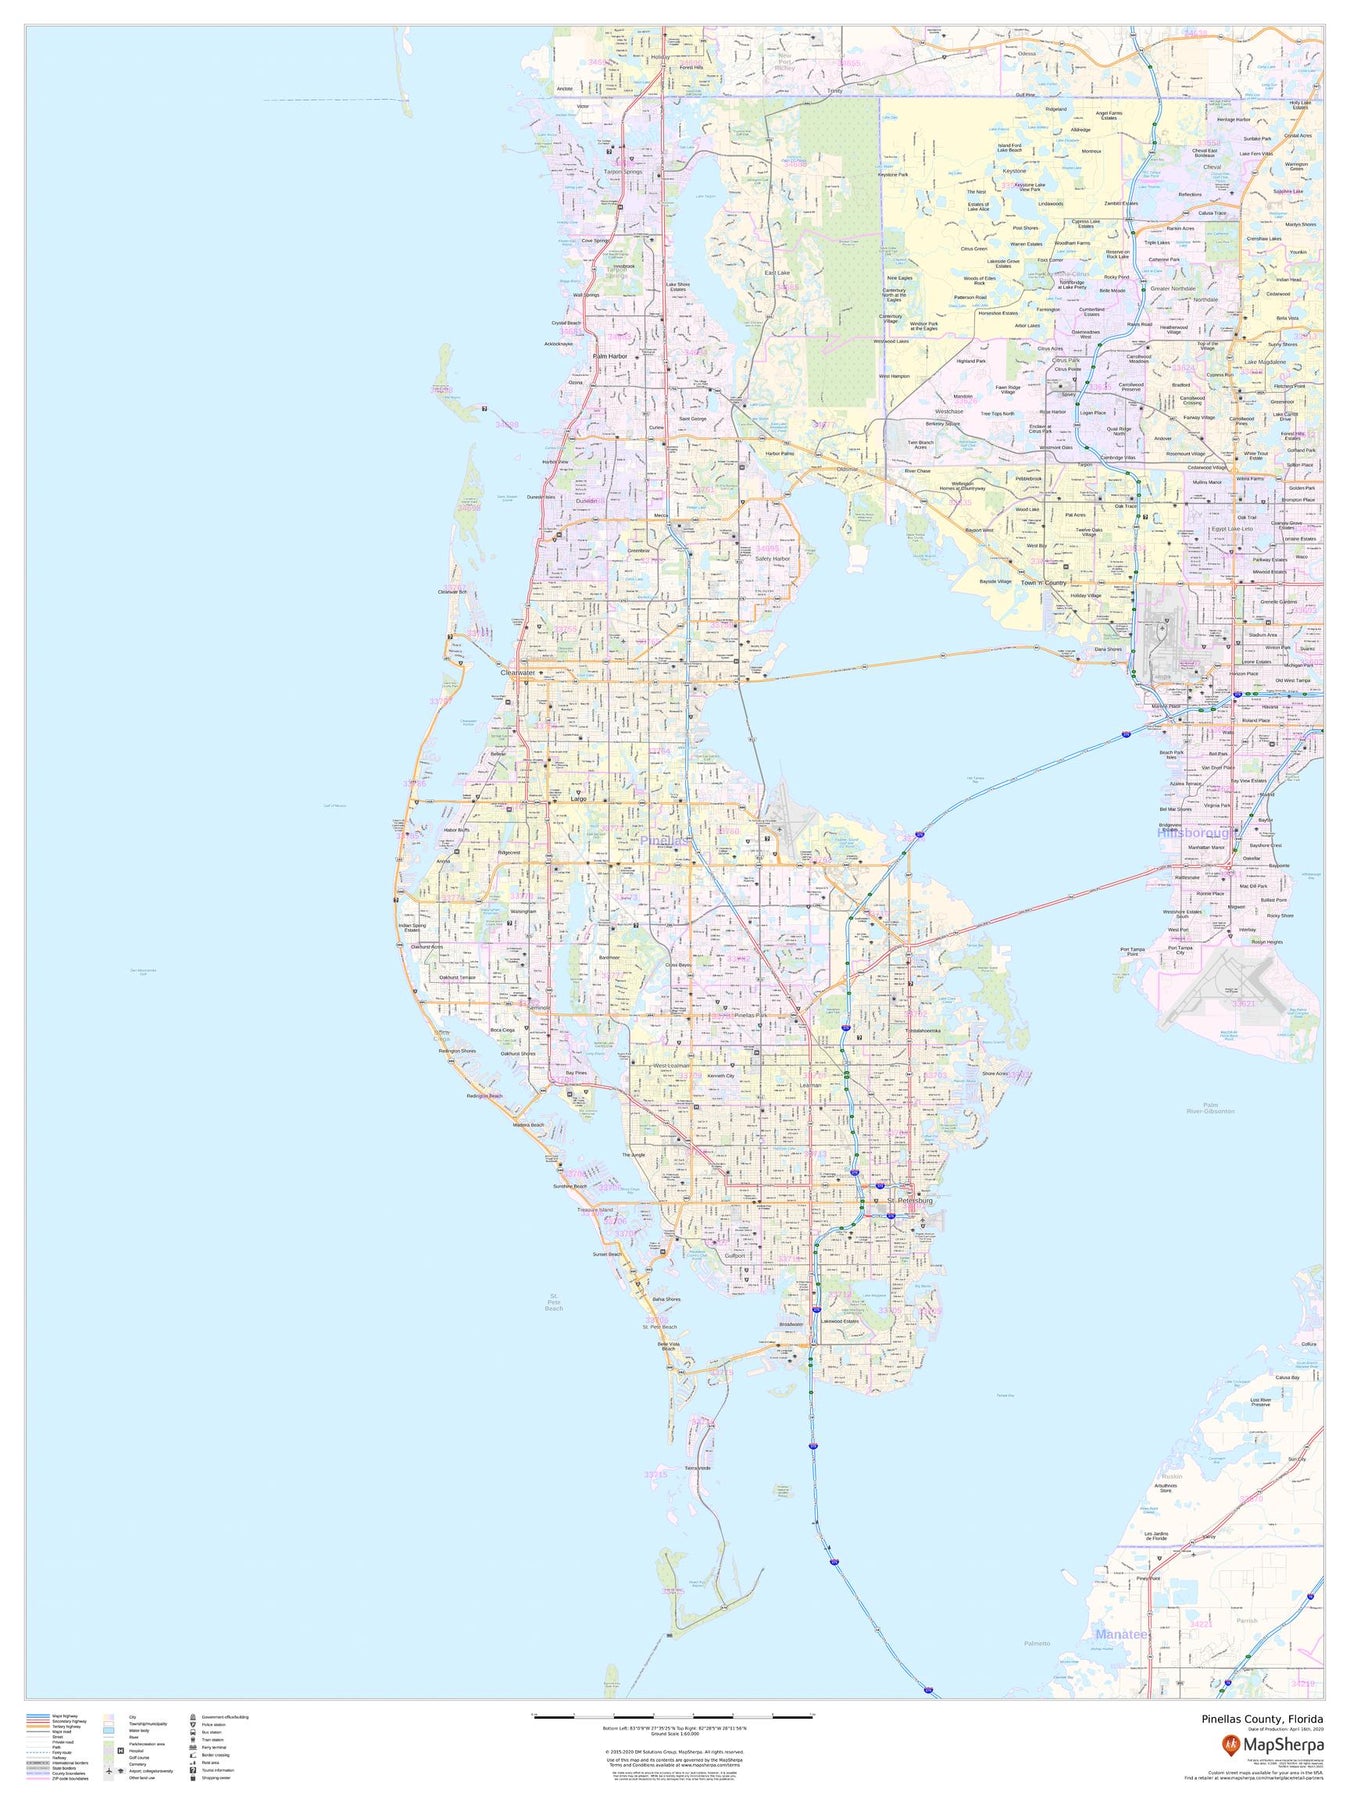 Texas - Louisiana - Mississippi - Alabama - Florida Map Labelled